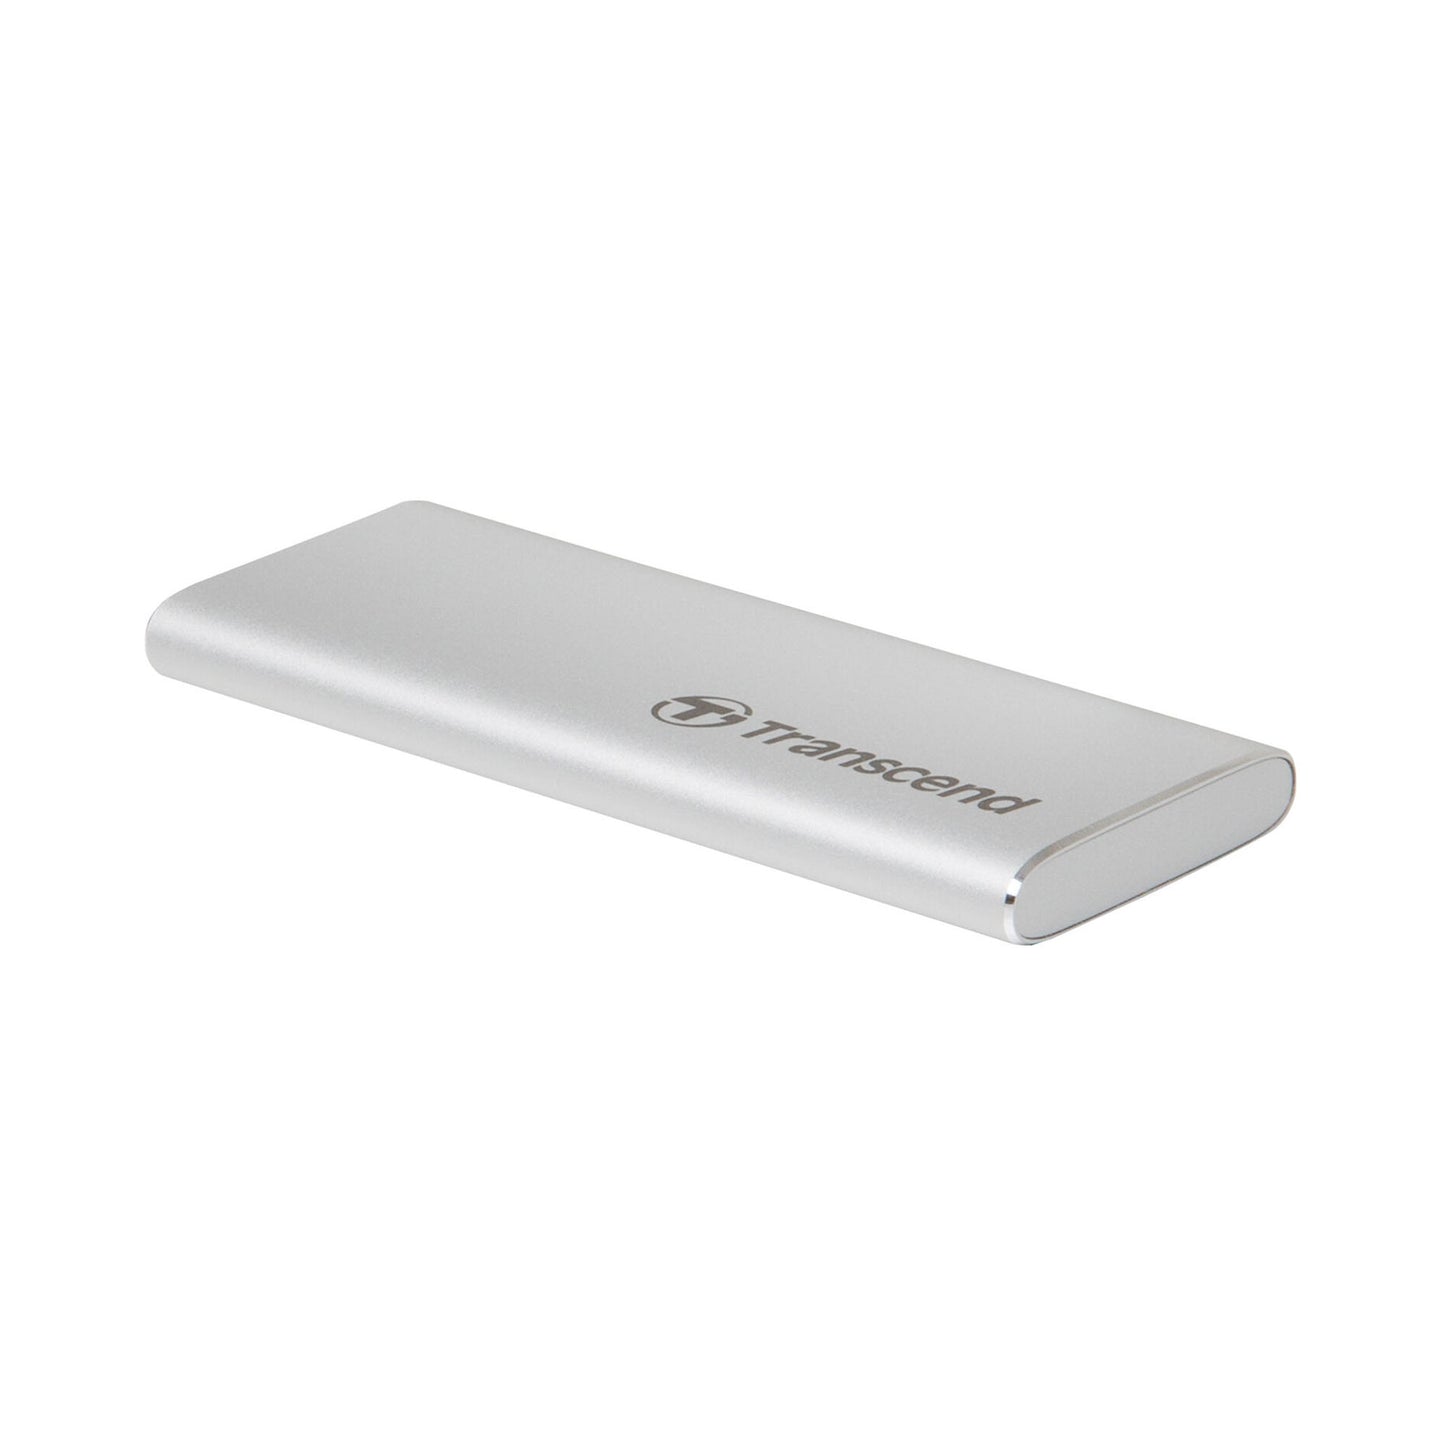 TRANSCEND ESD260C Portable SSD USB 3.1 Gen 2 Type C 500GB - Silver